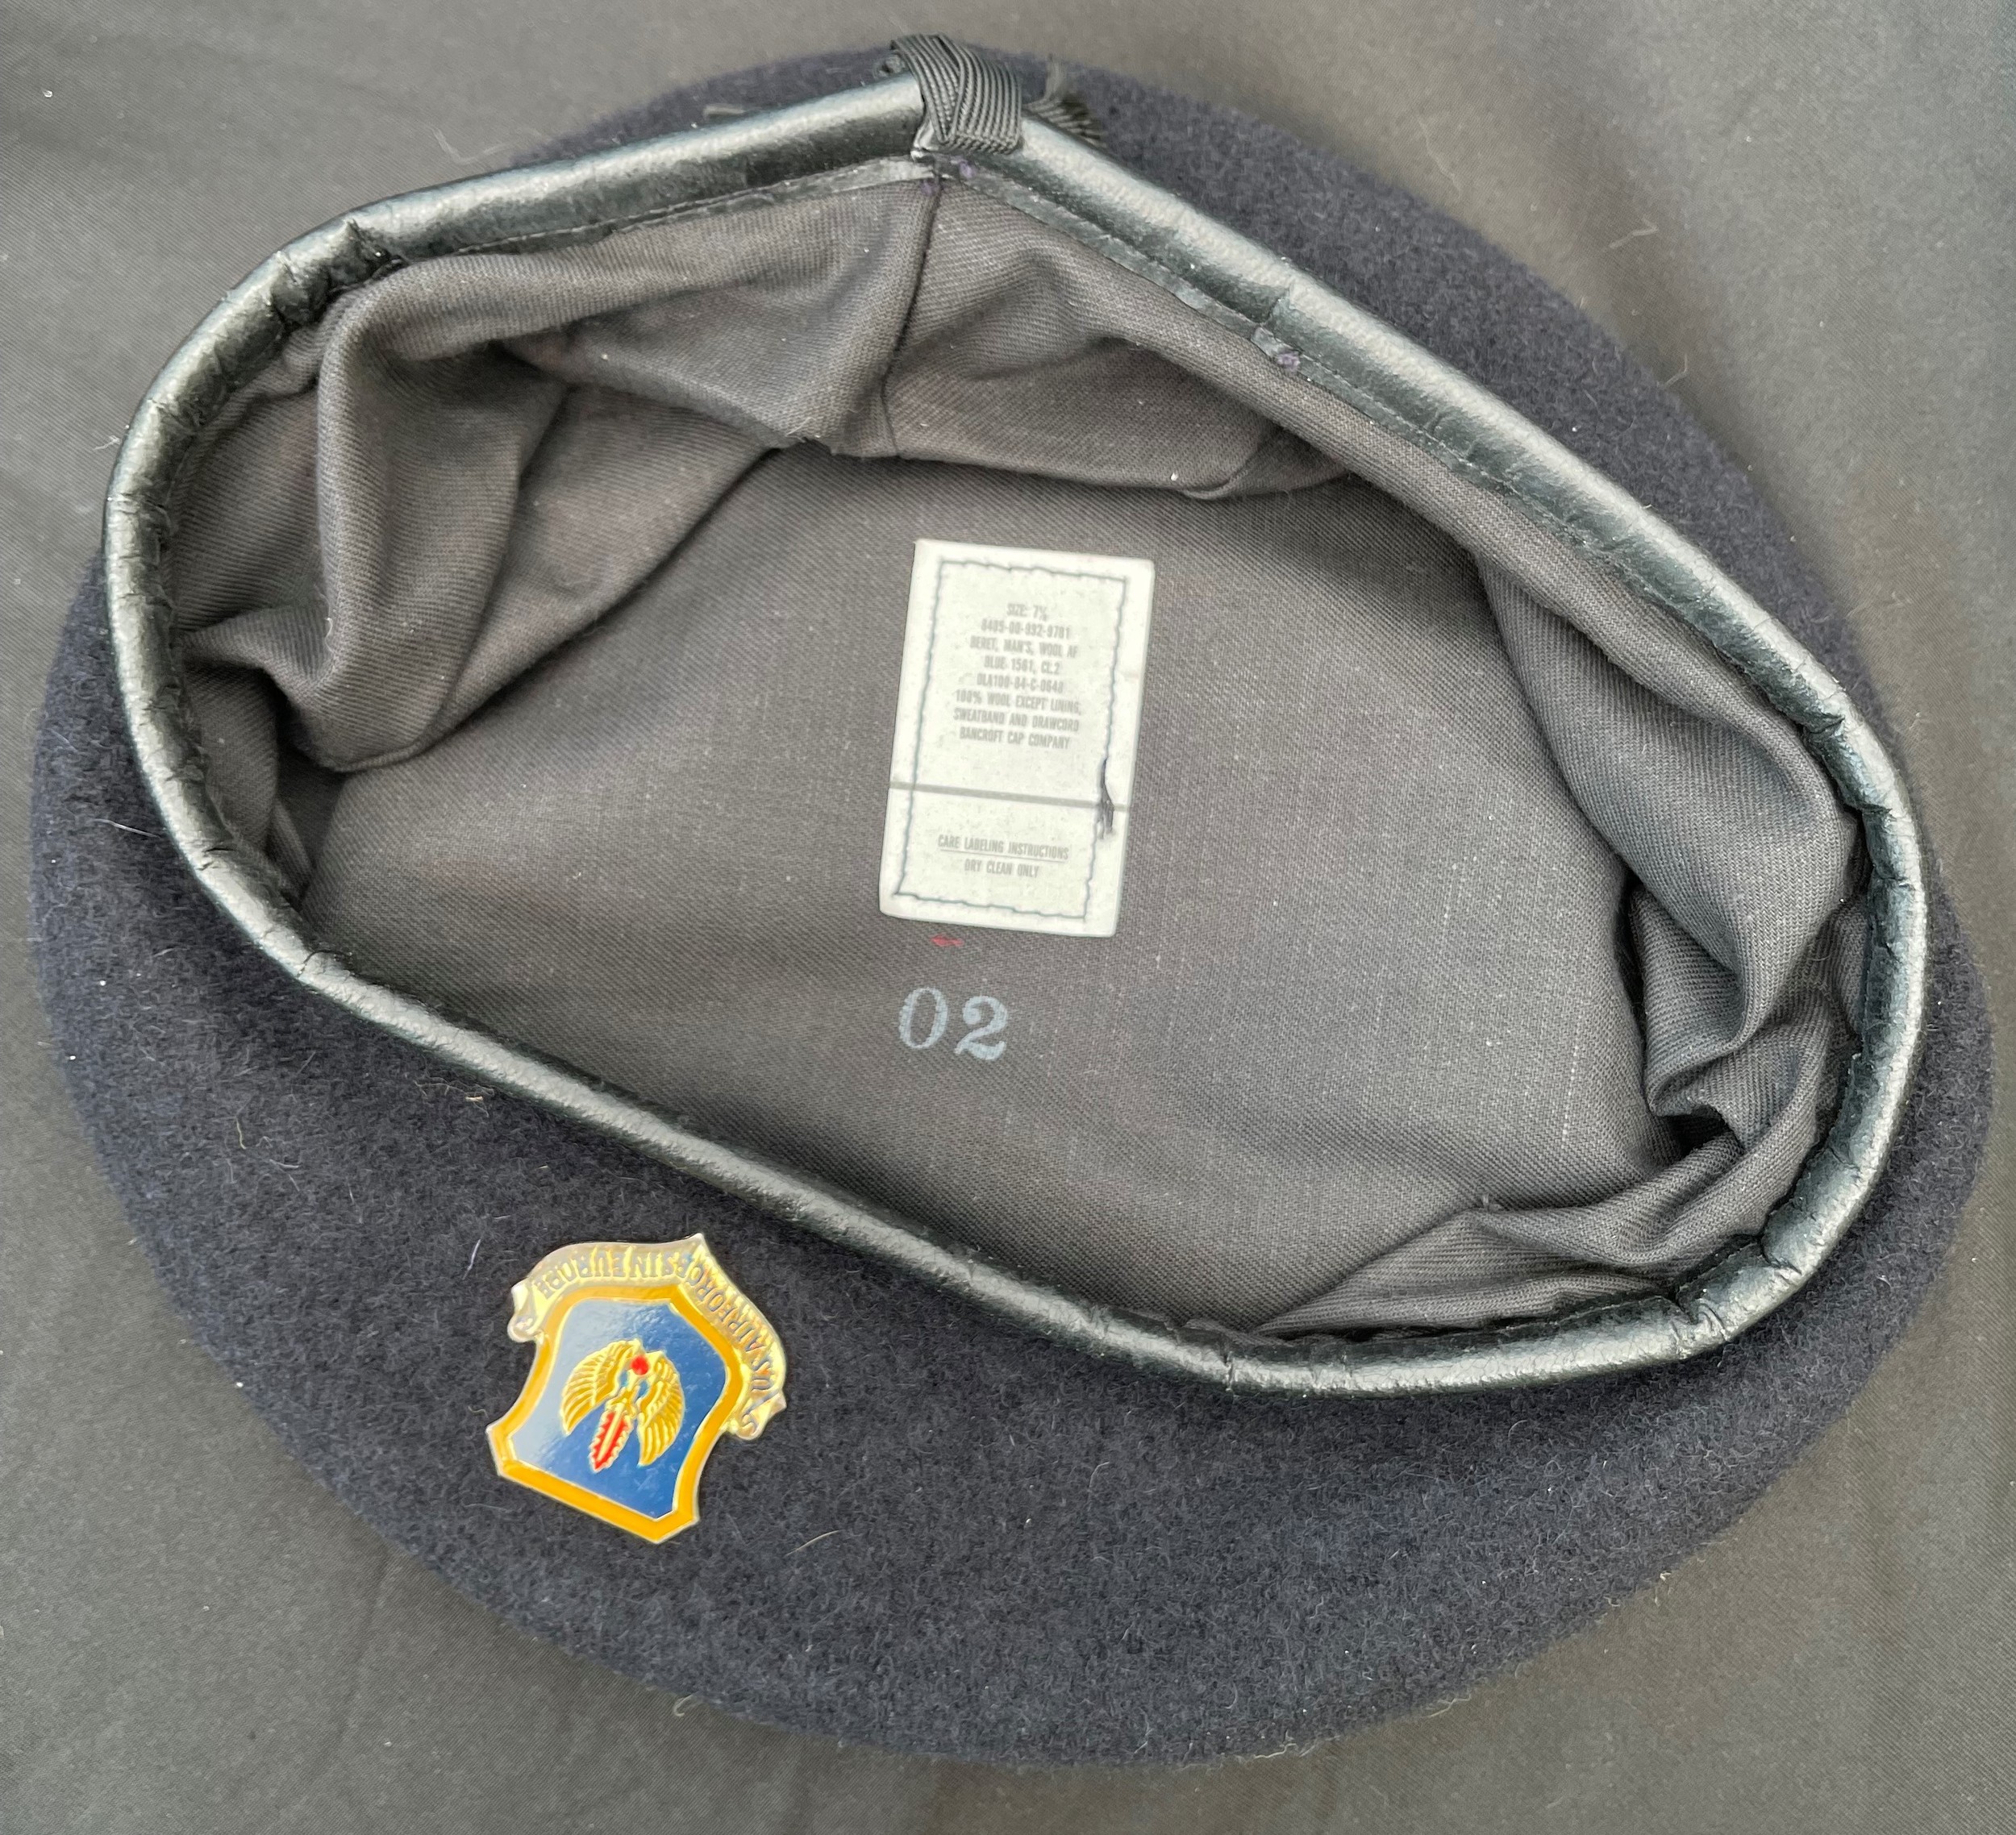 USMC Woodland Camo Utility Cap, small size: USAF Blue Beret with cap badge, size 7 1/8th: British - Image 3 of 5